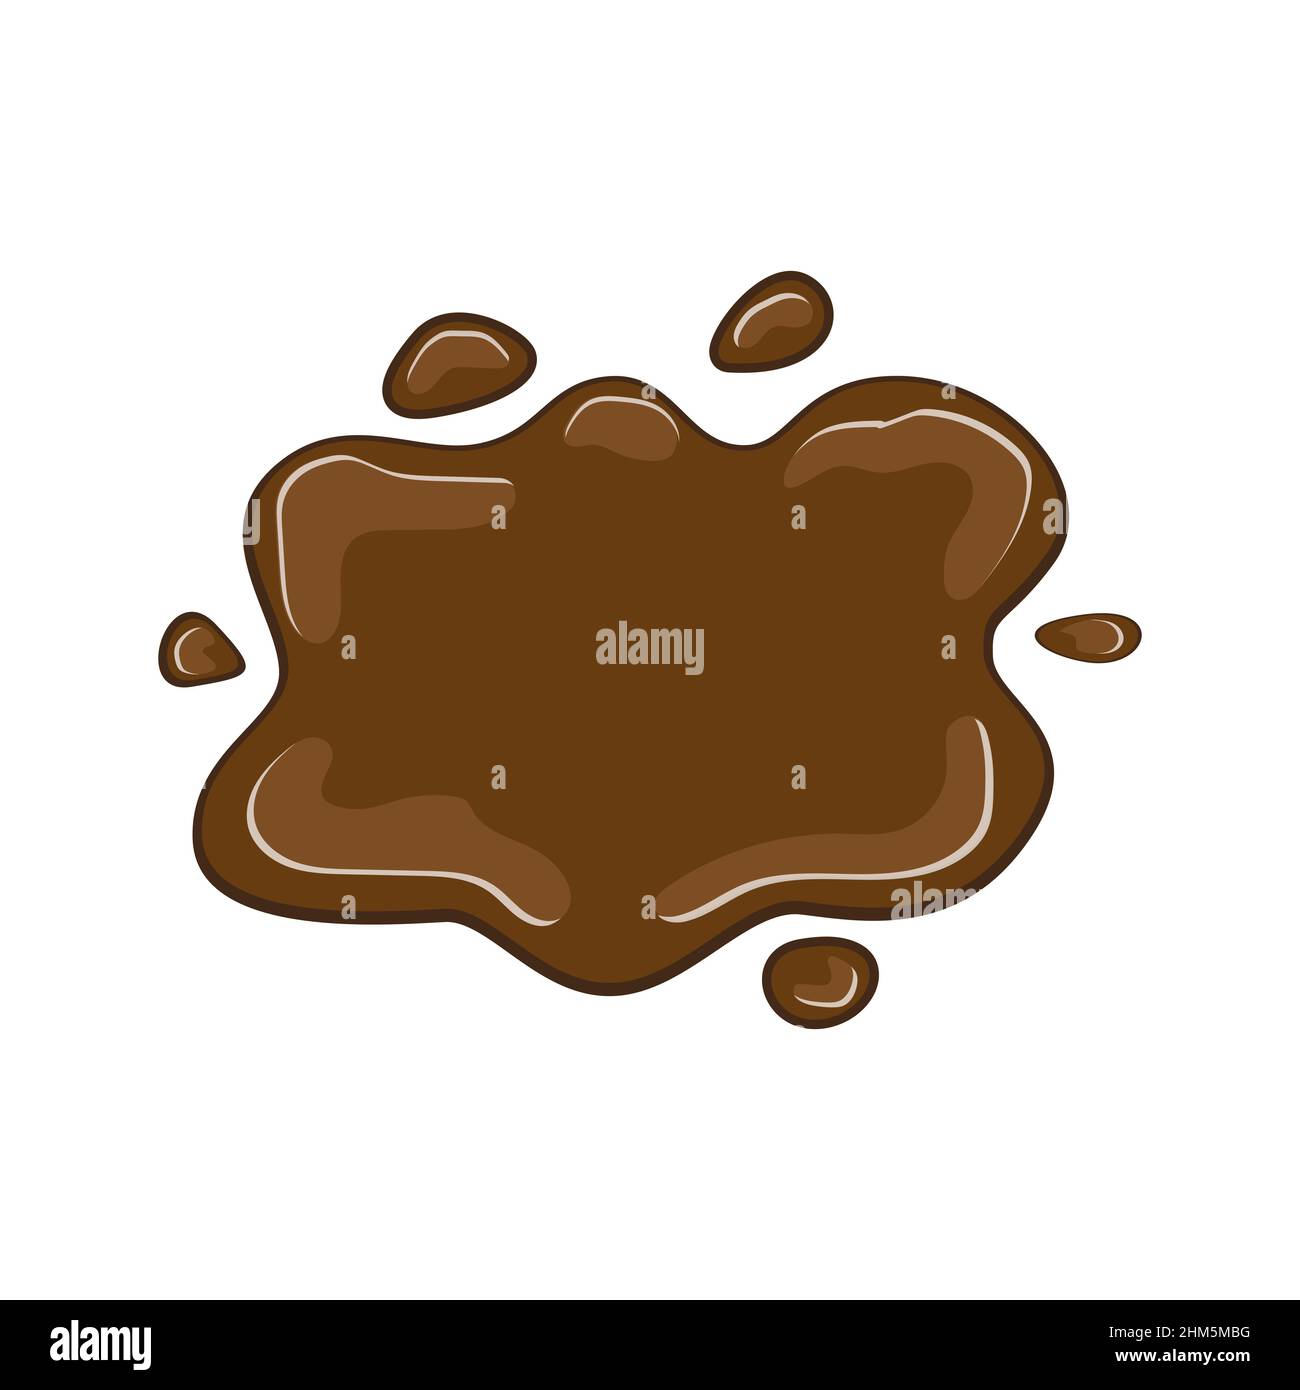 Chocolate splat vector illustration Stock Vector